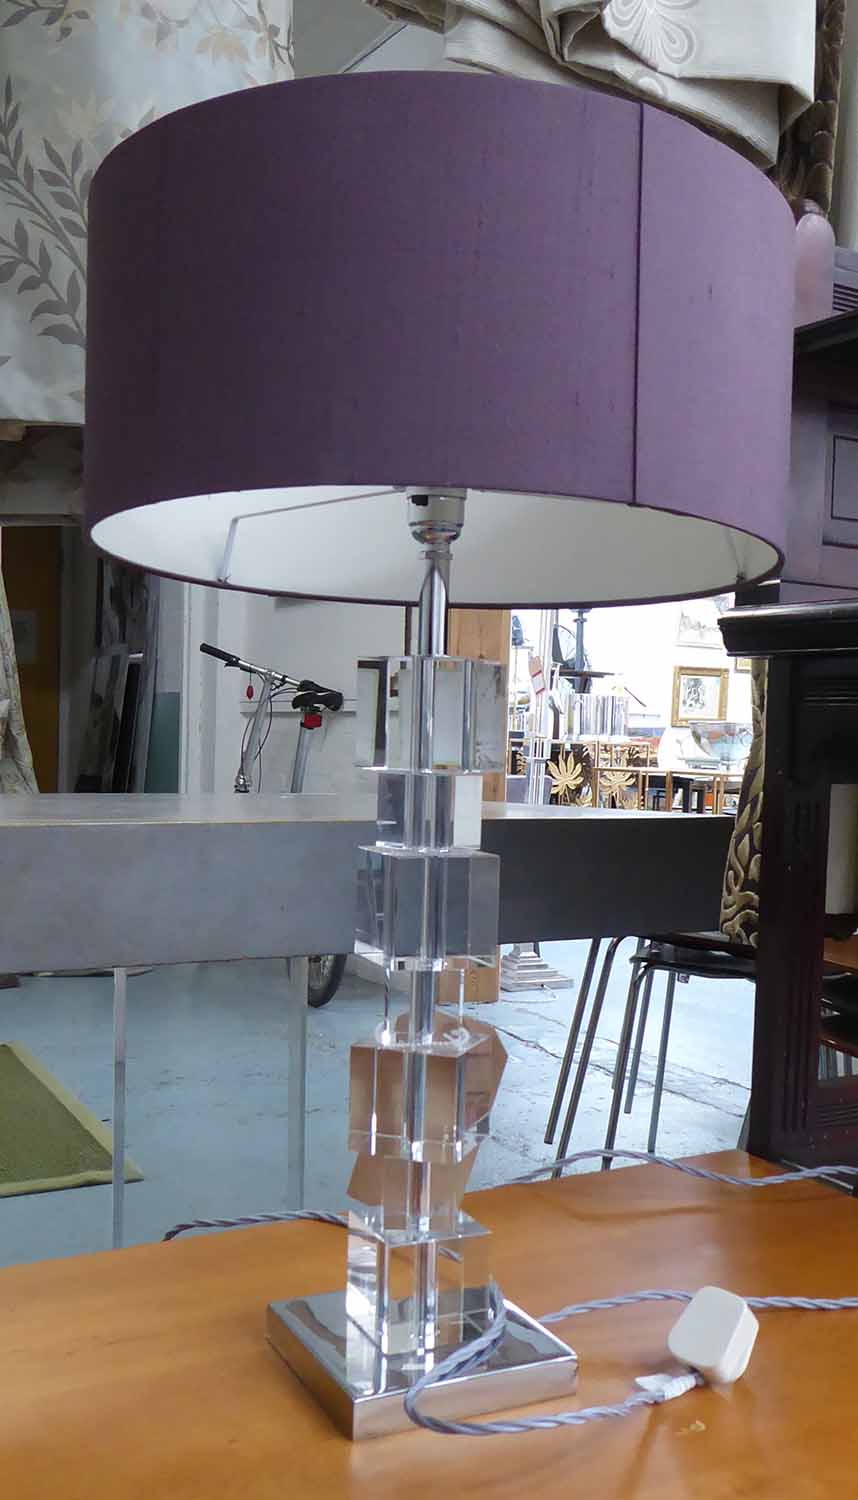 HEATHFIELD & CO BERLIN MEDIUM TABLE LAMP, with shade, 61cm H.